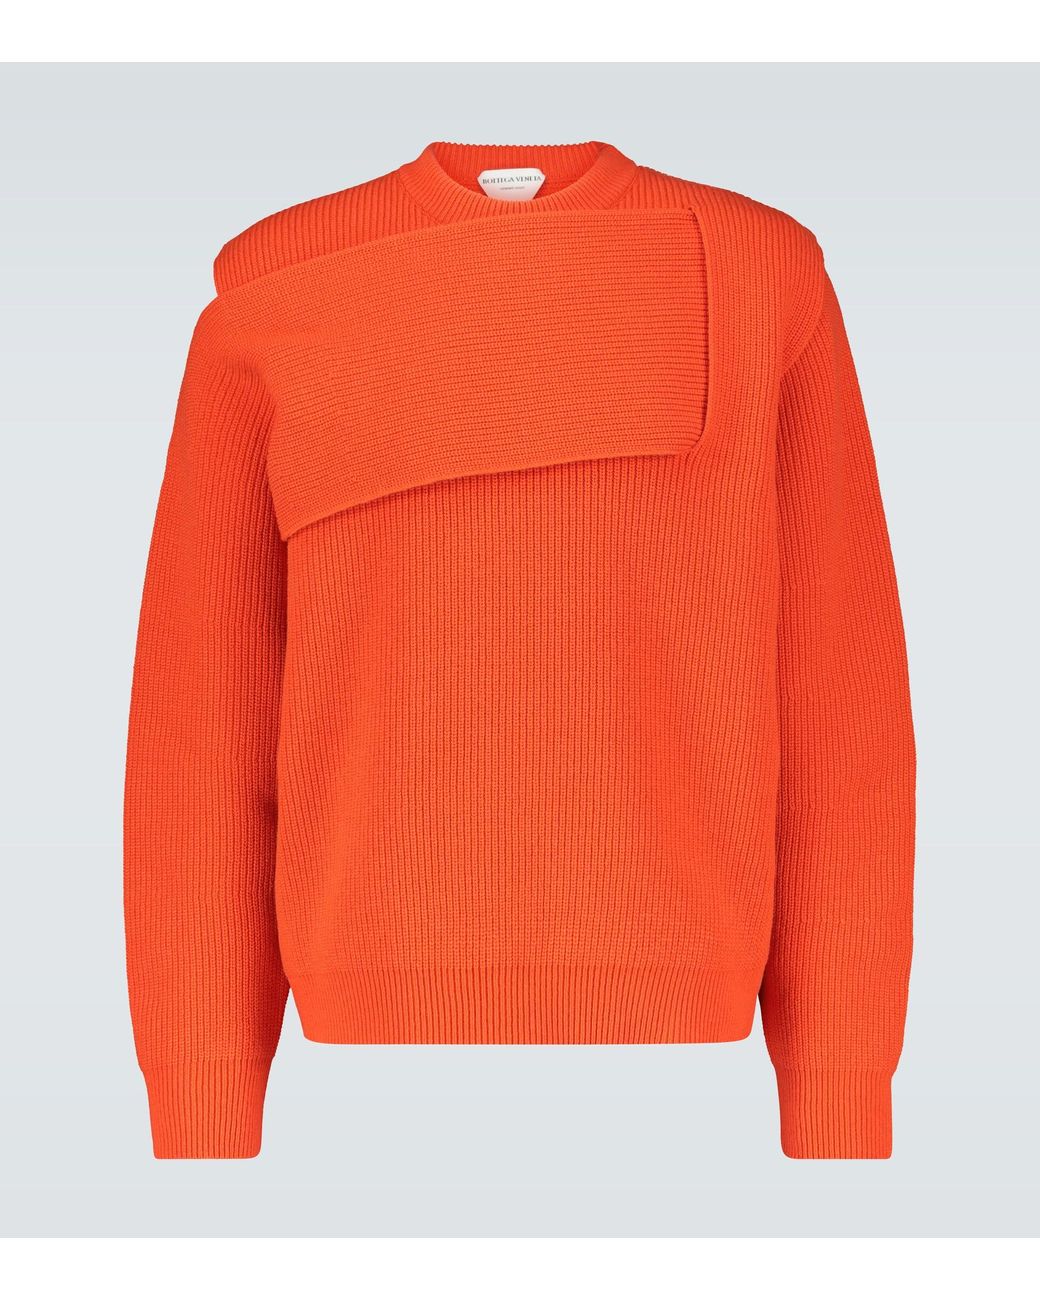 Bottega Veneta Deconstructed Knit Cashmere Sweater in Orange for Men | Lyst